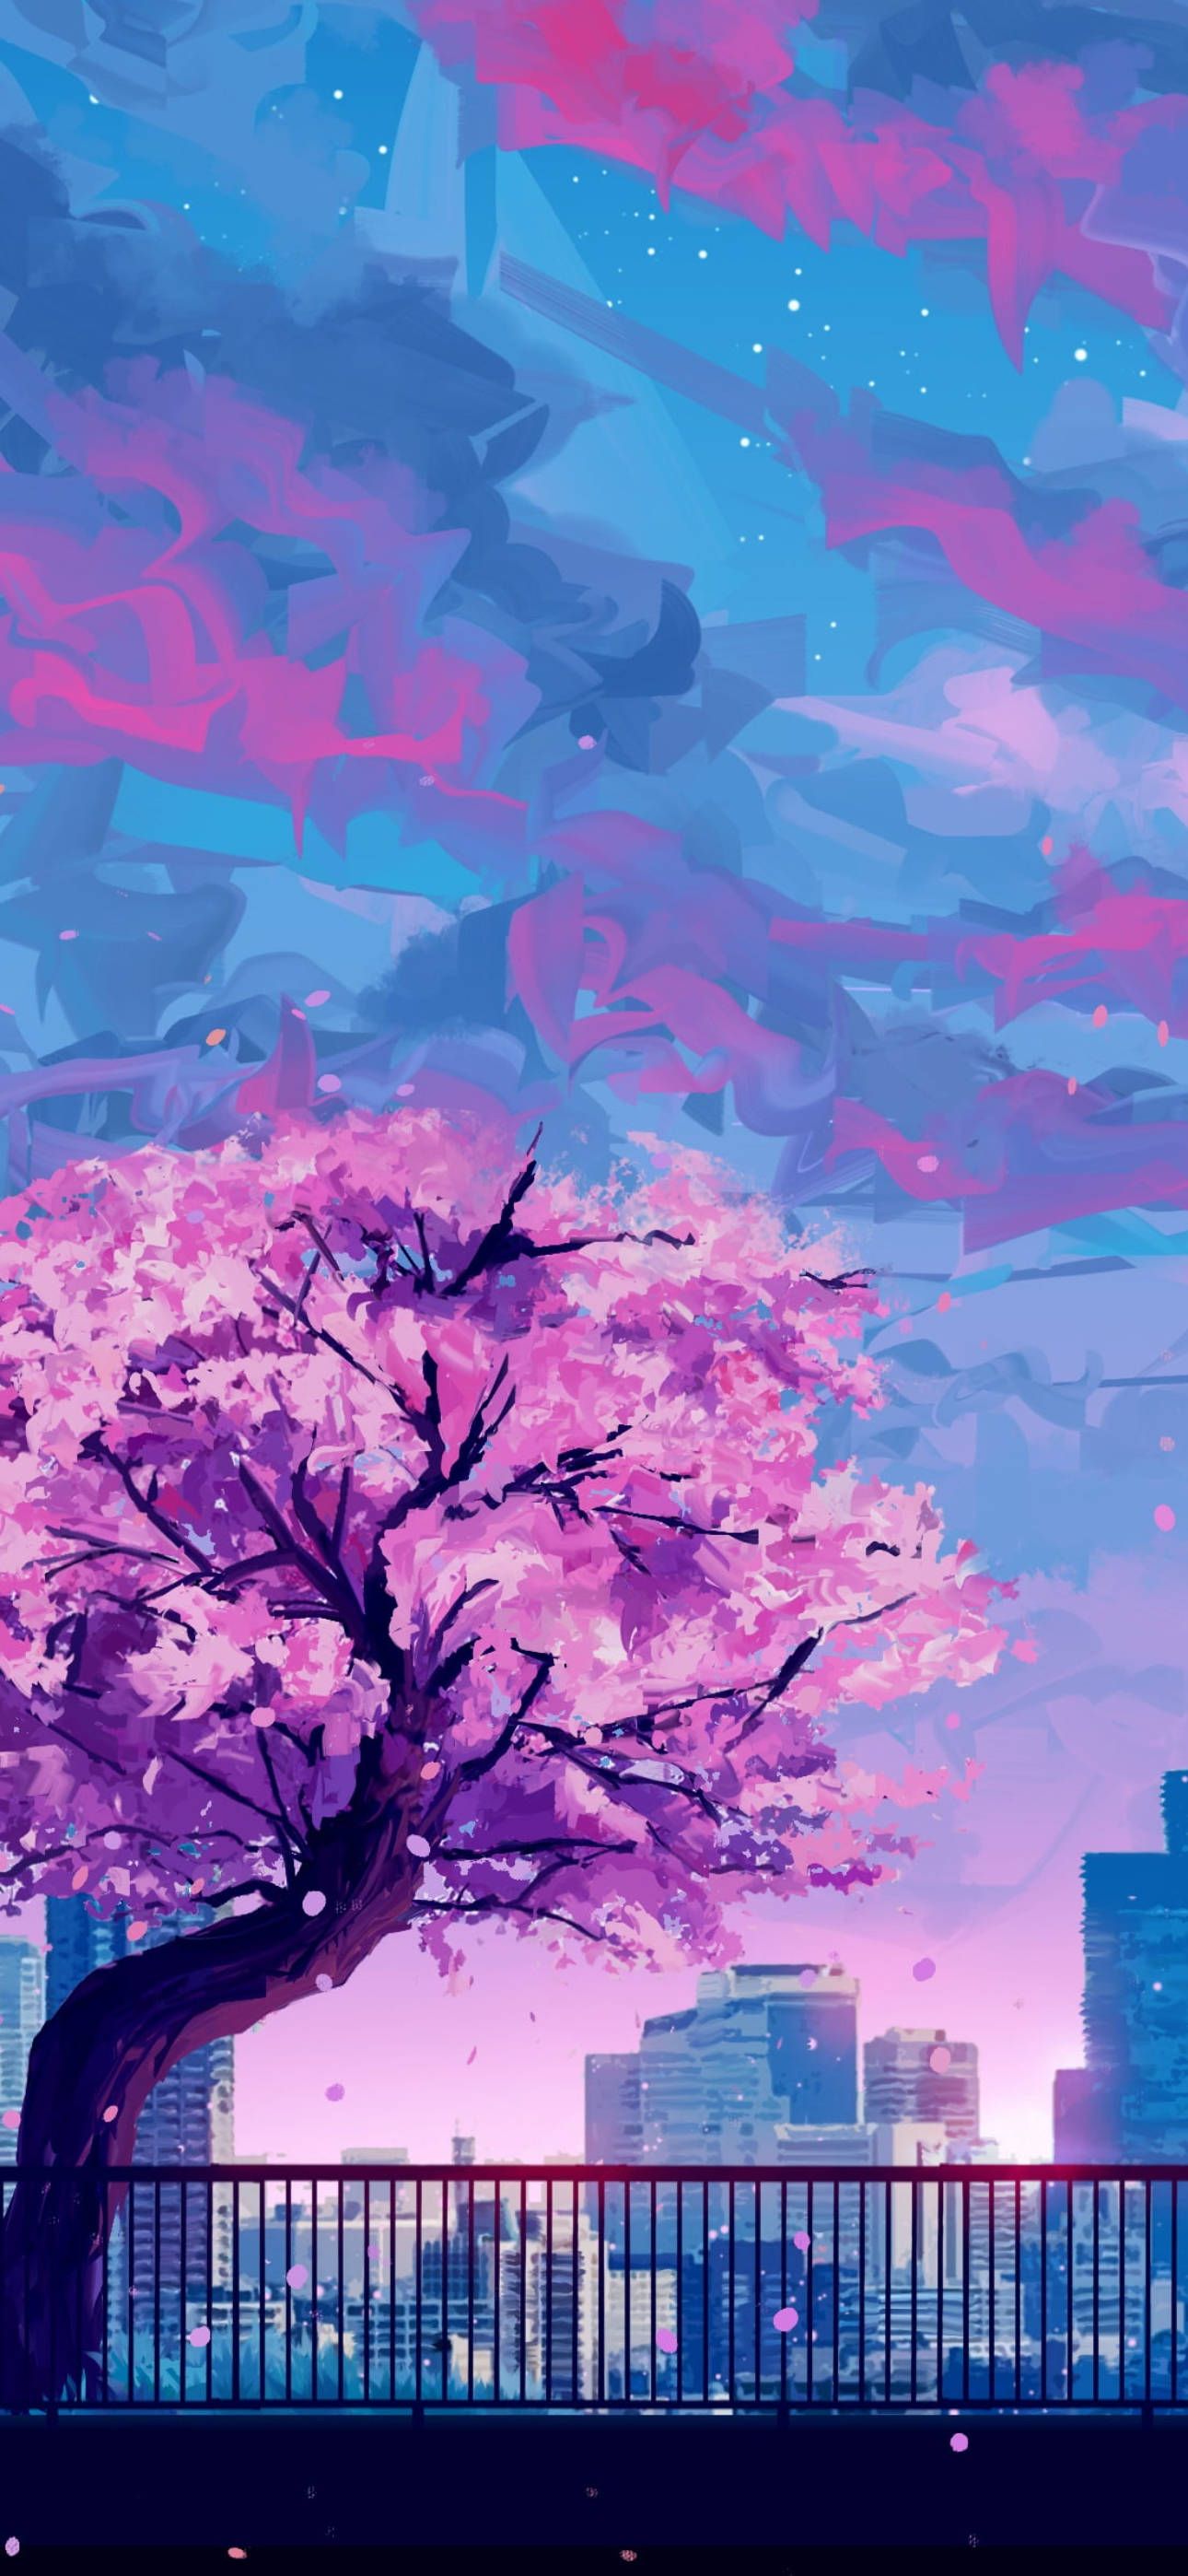 Download Japanese Aesthetic iPhone Bending Sakura Tree Wallpaper